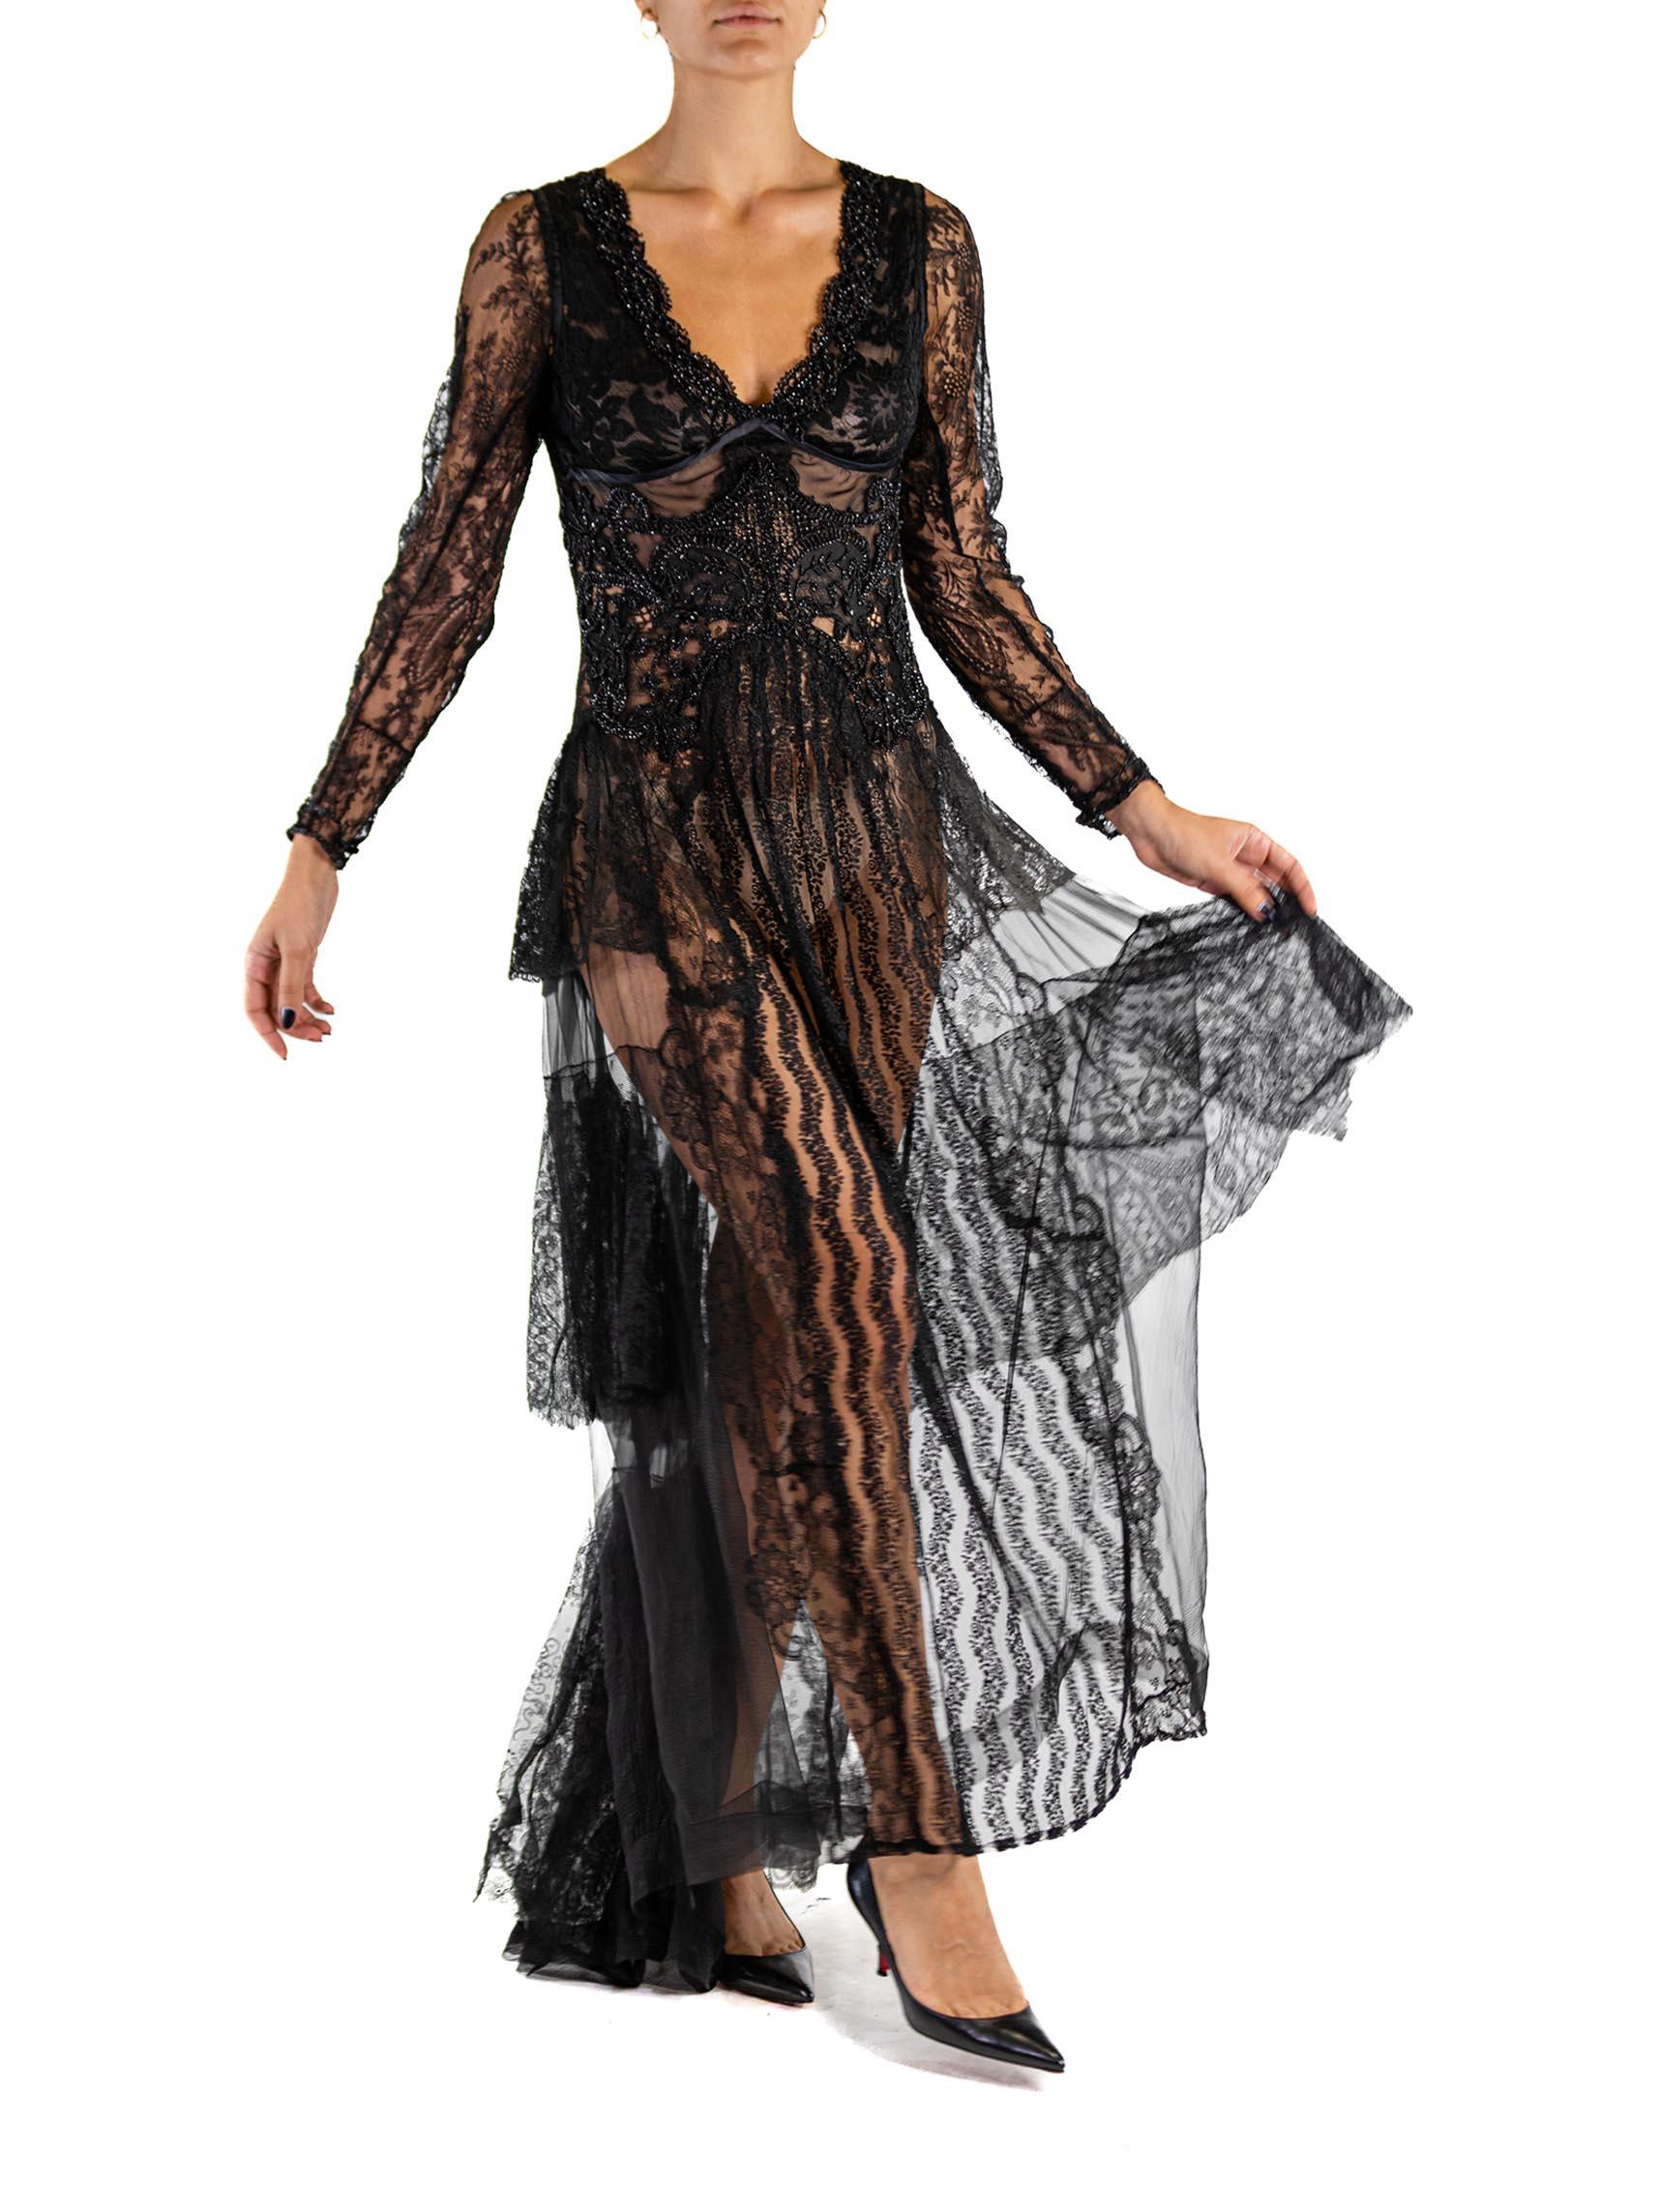 MORPHEW ATELIER Black Antique Lace Victorian Beadwork Gown For Sale 4